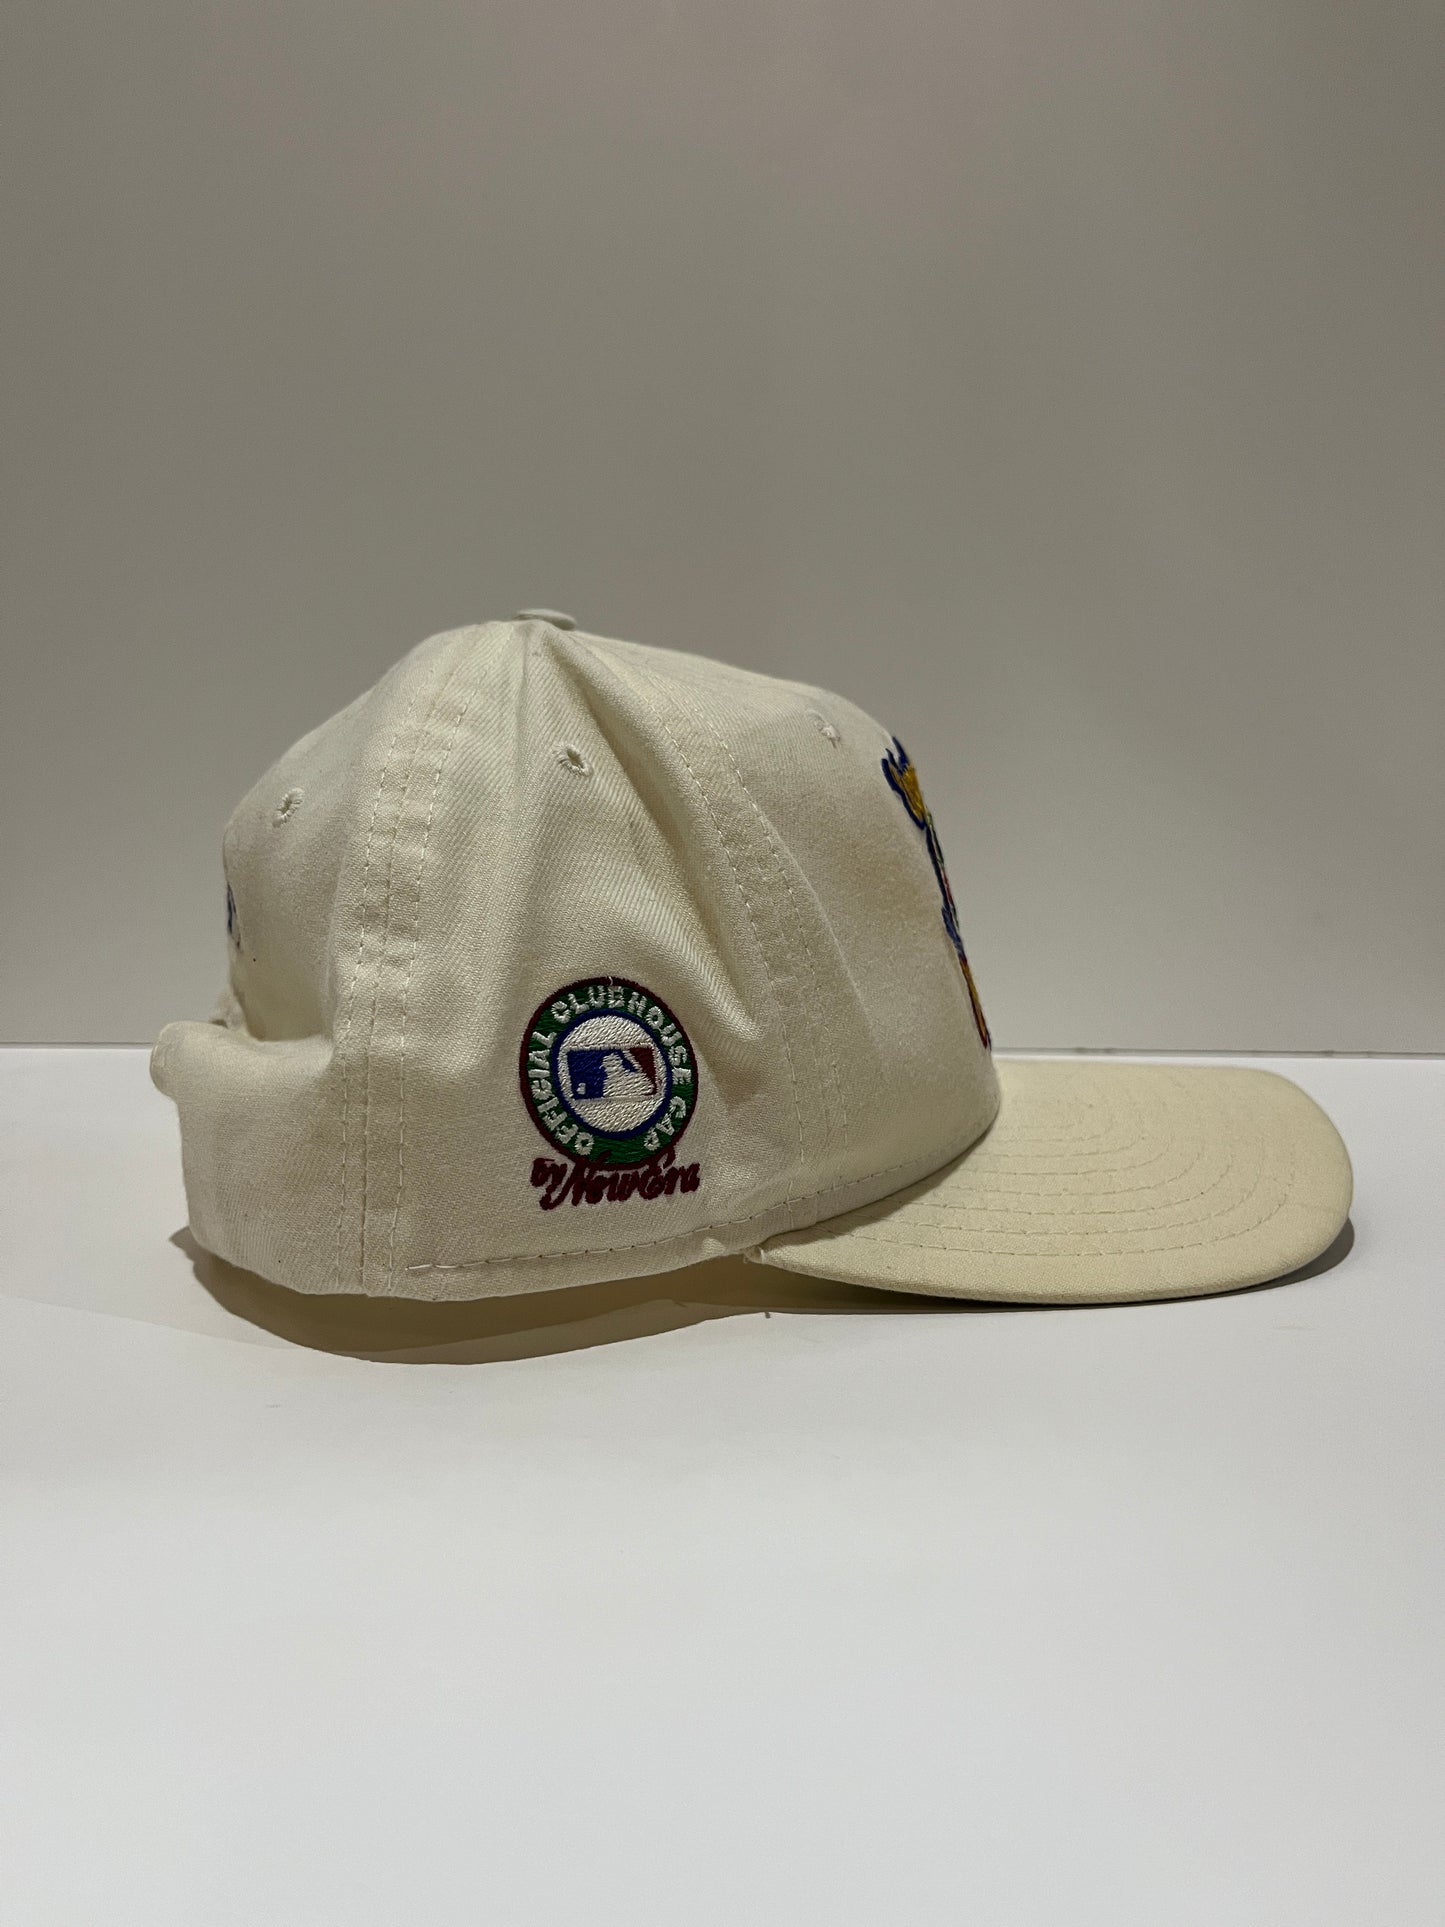 Vintage New York Yankees New Era 1996 World Series Champions Snapback Hat